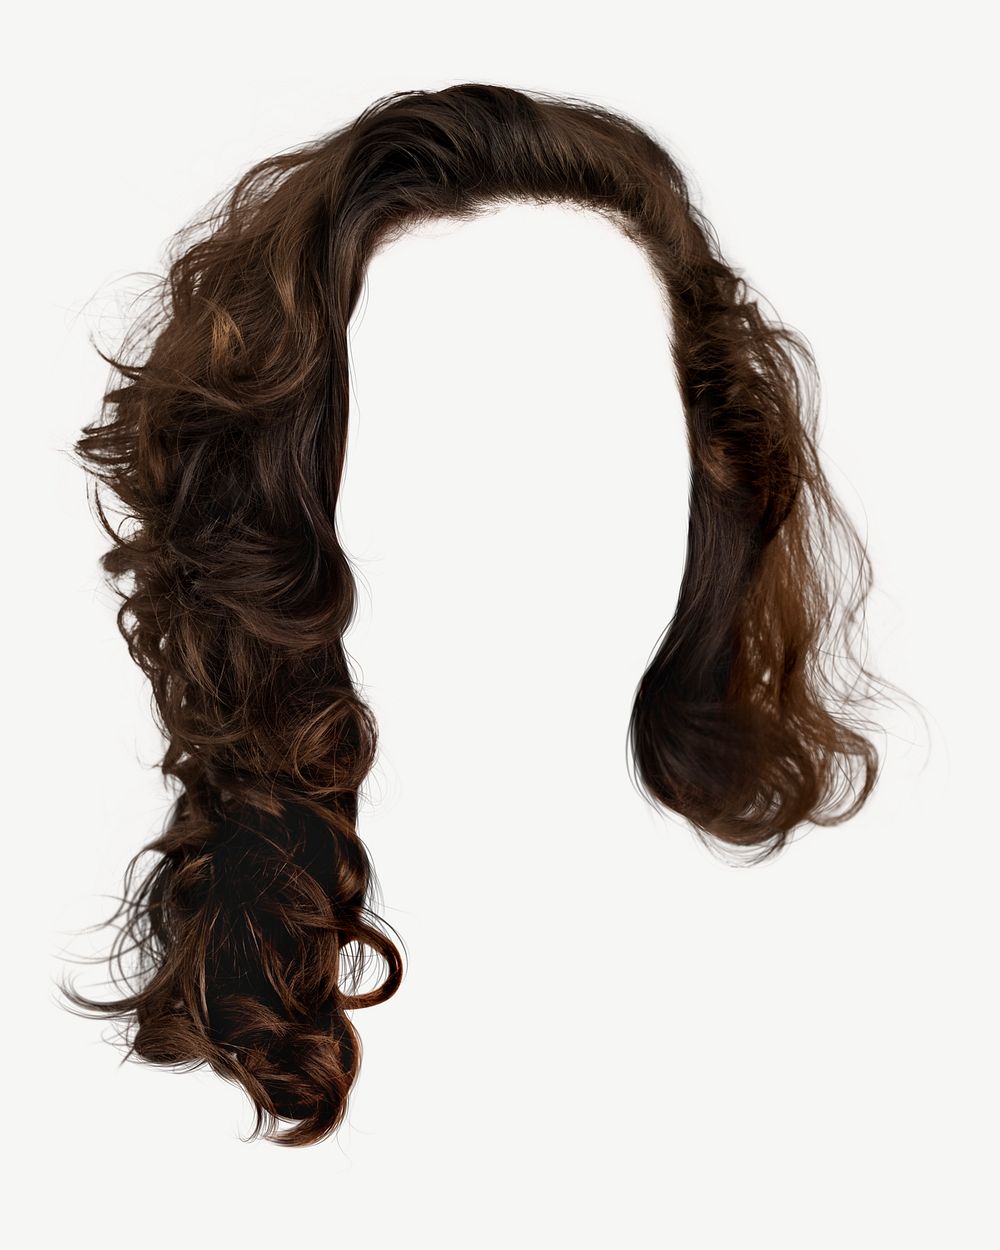 Curly brown hair woman psd